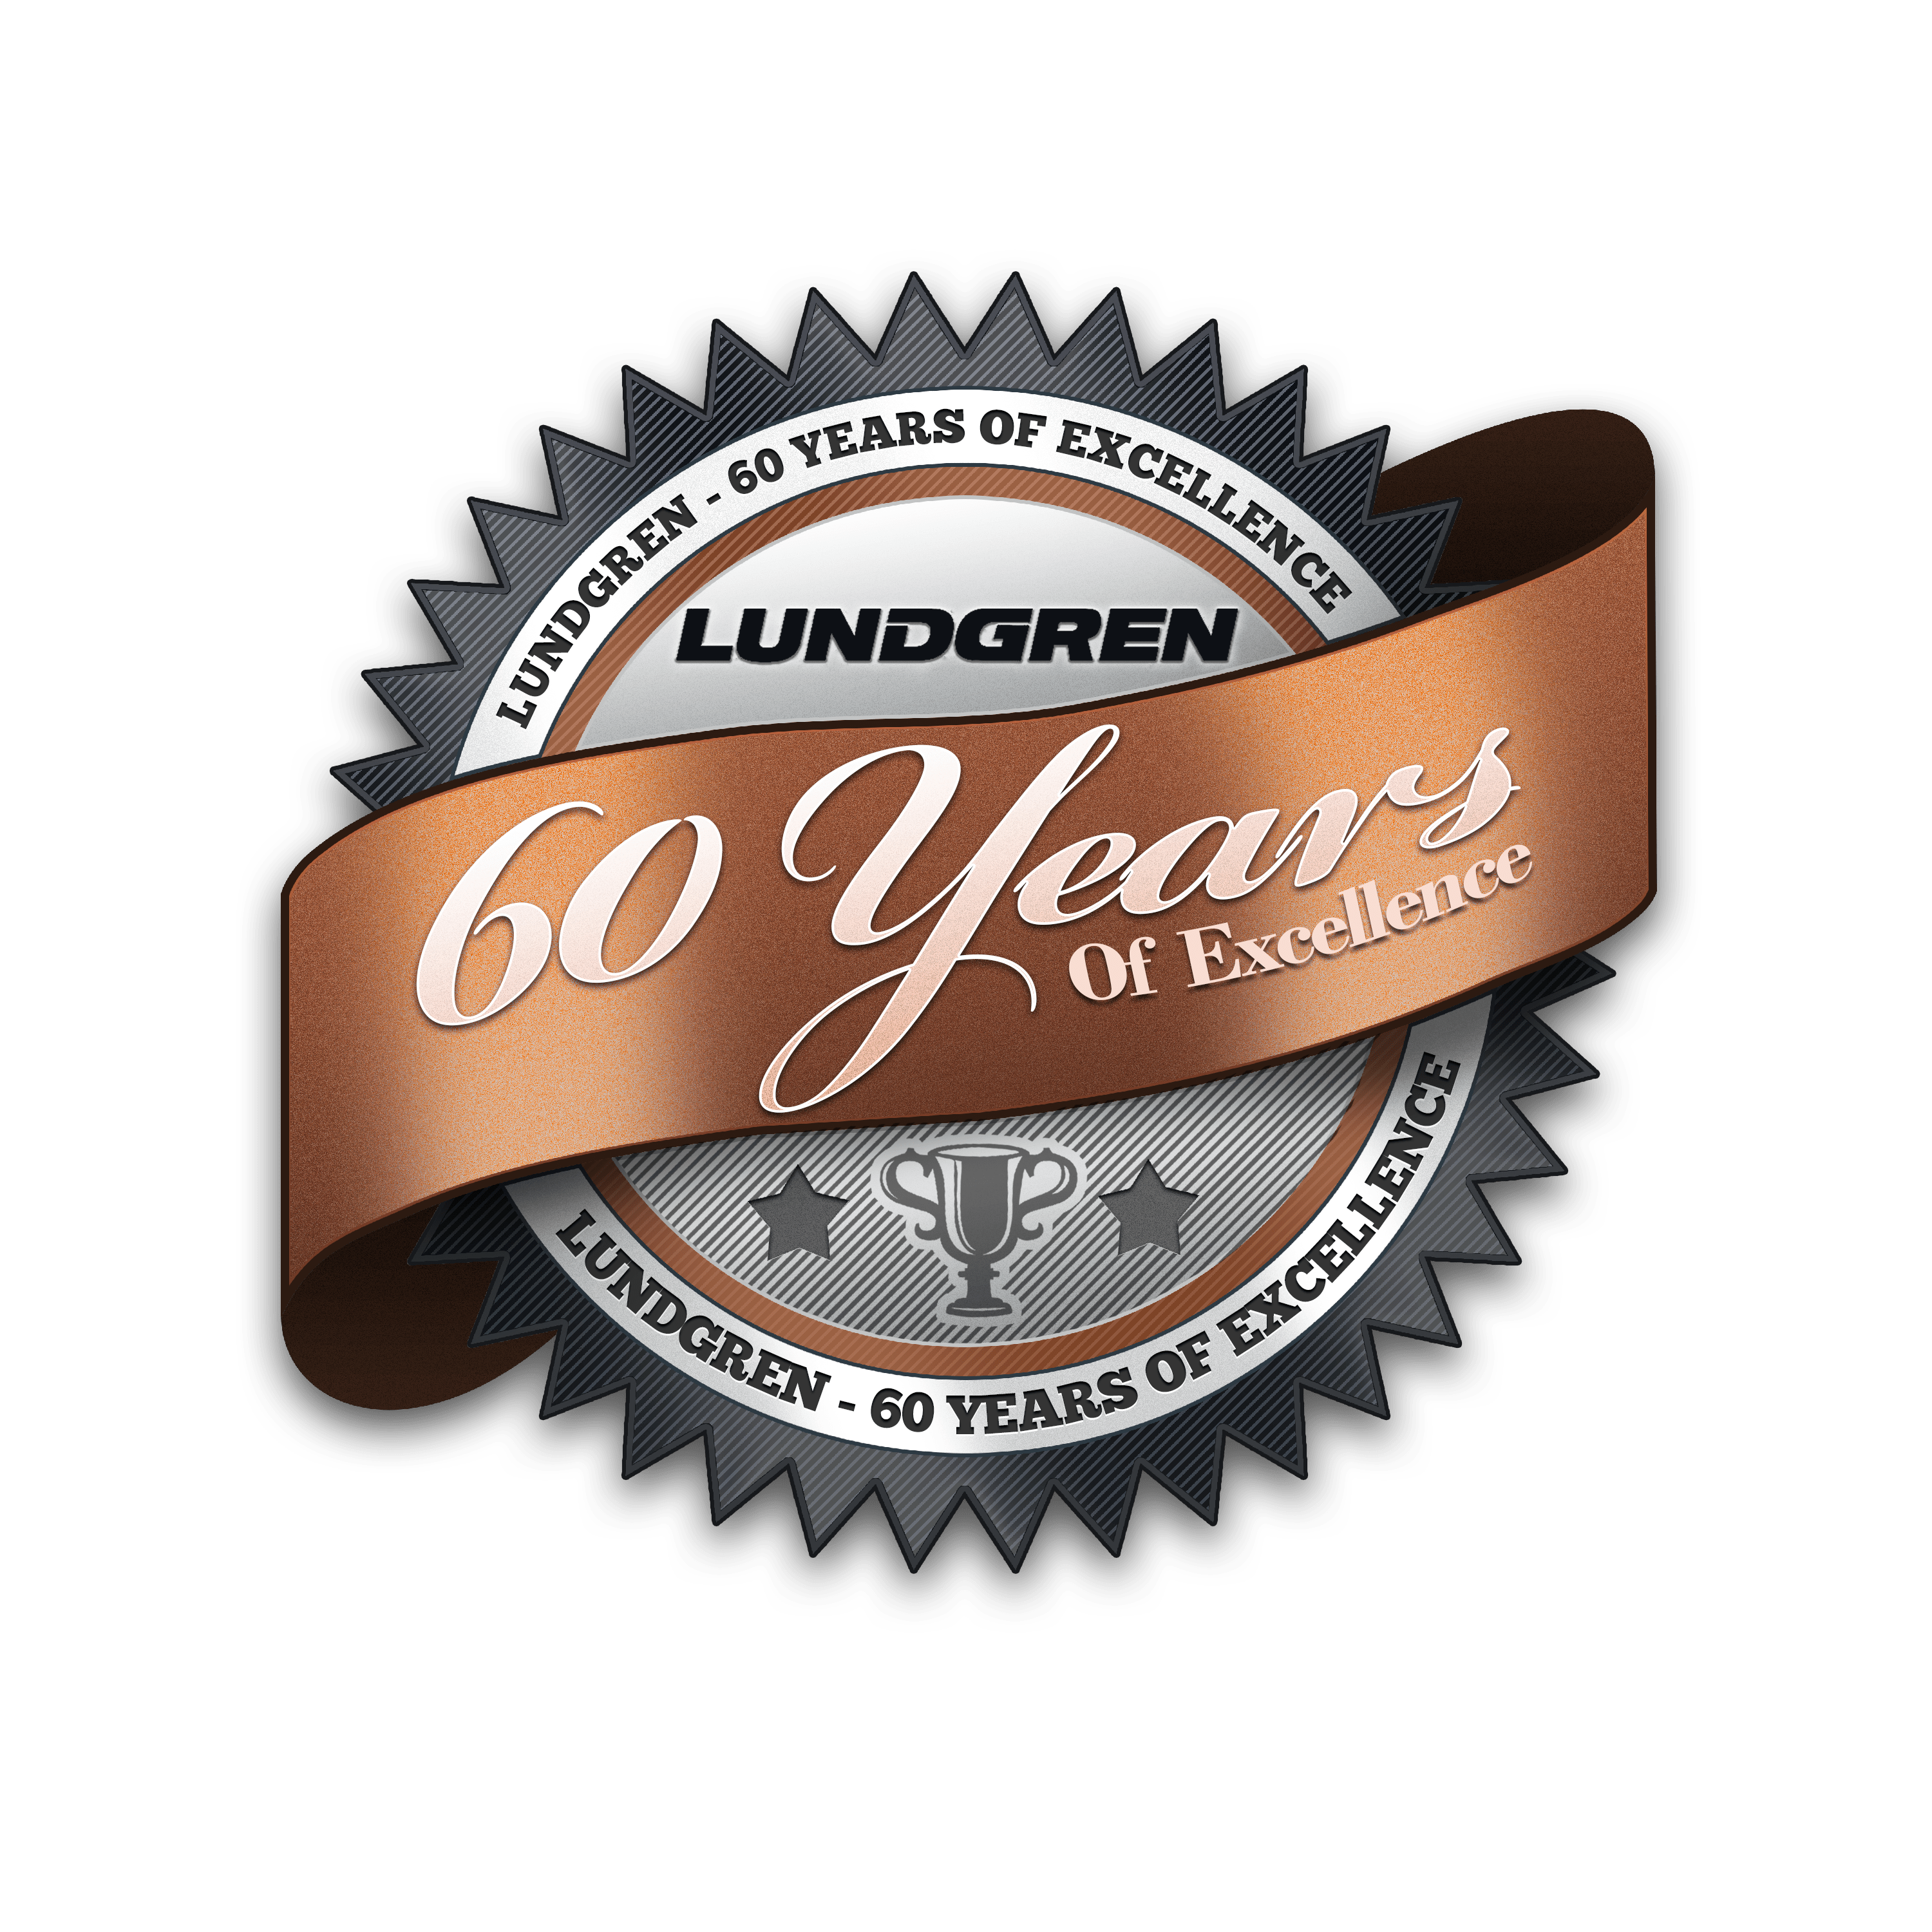 Lundgren 60 year badge